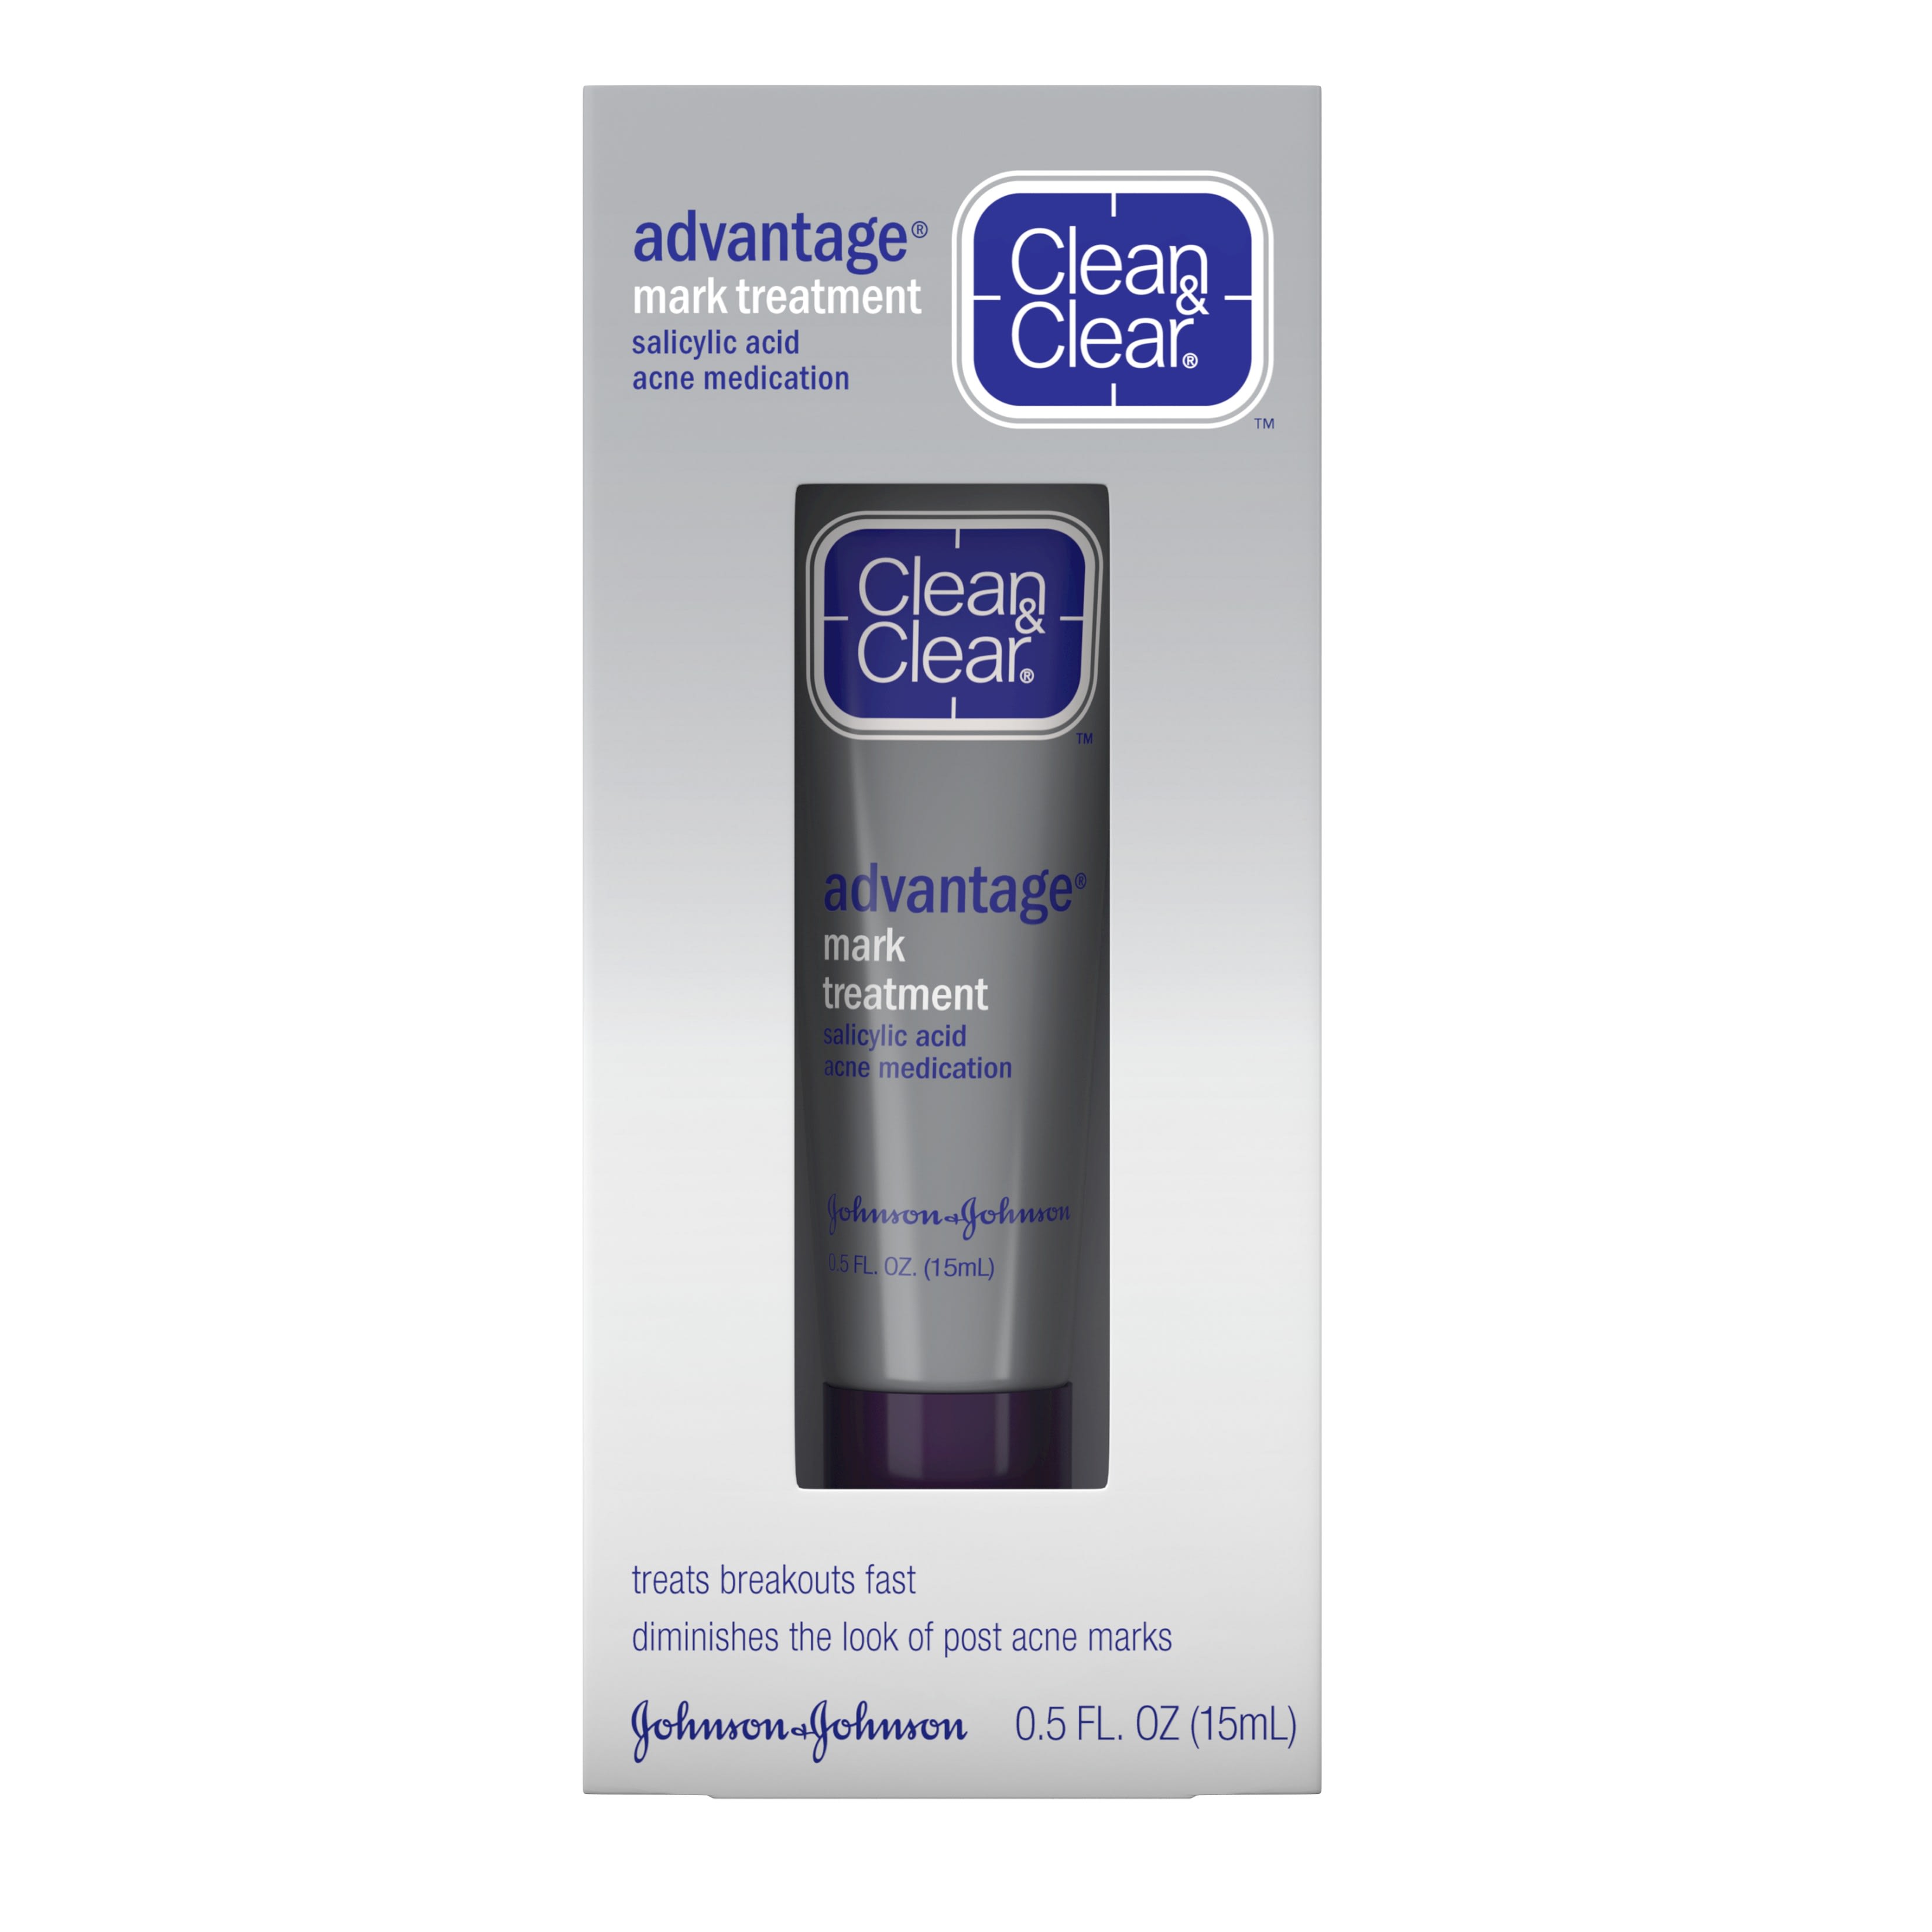 Clean & Clear Advantage Acne Mark Treatment with Salicylic Acid.5 oz - image 1 of 9